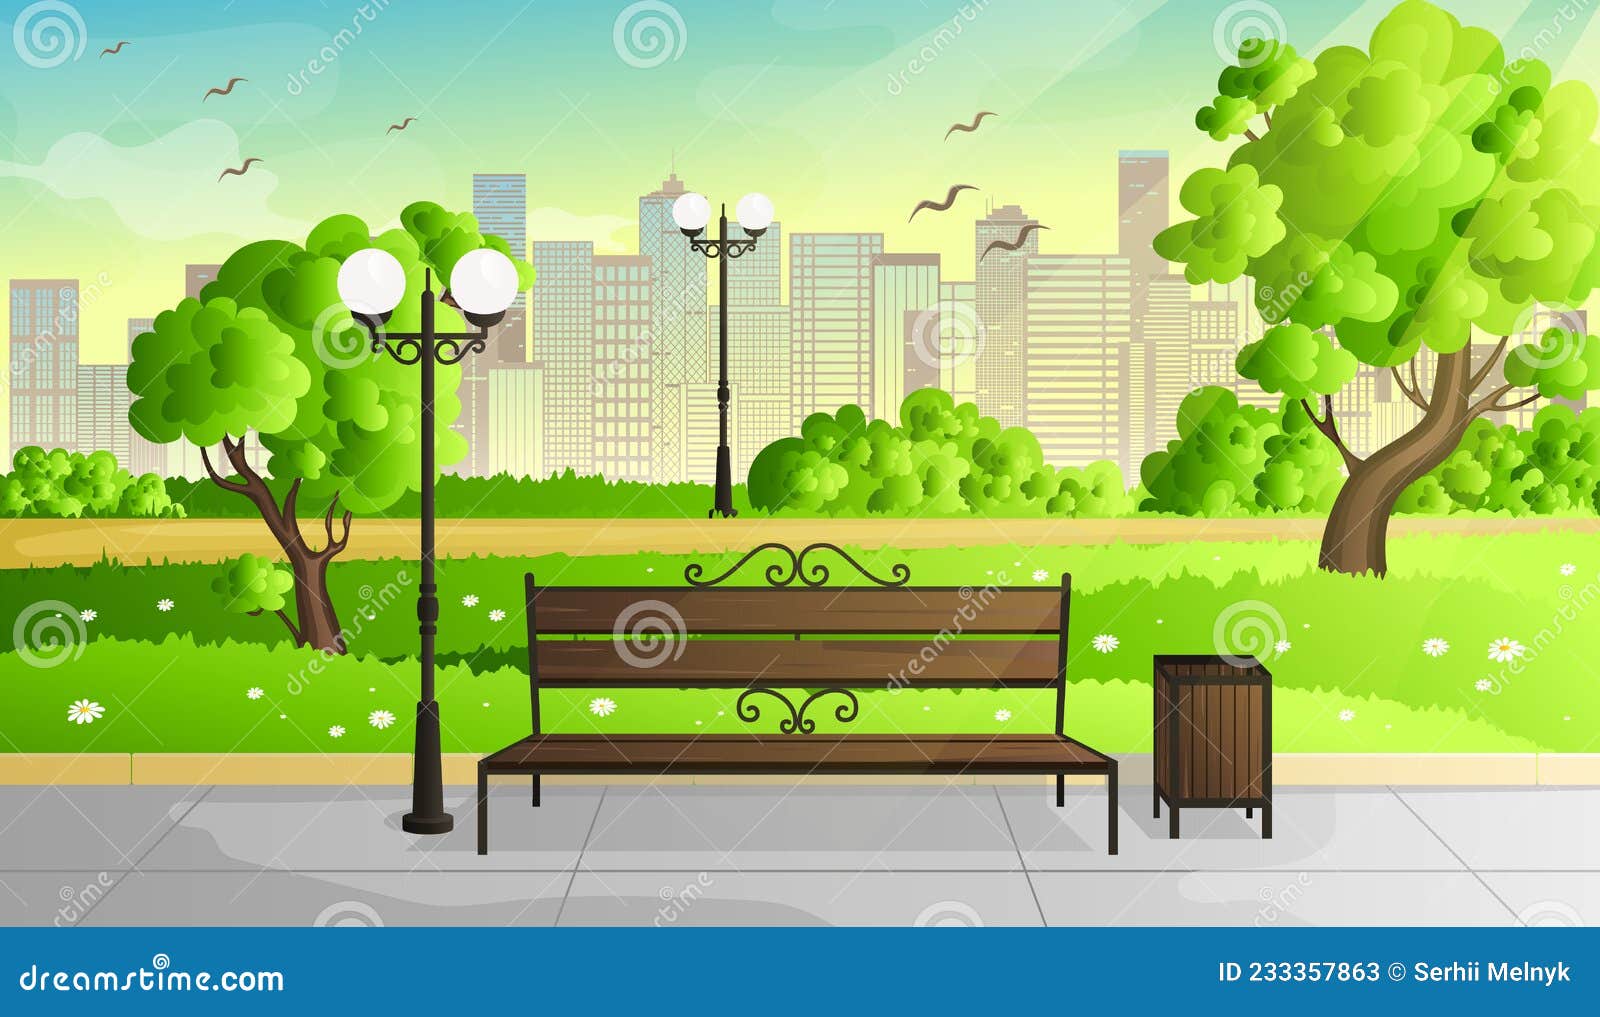 City park vector stock vector. Illustration of building - 233357863